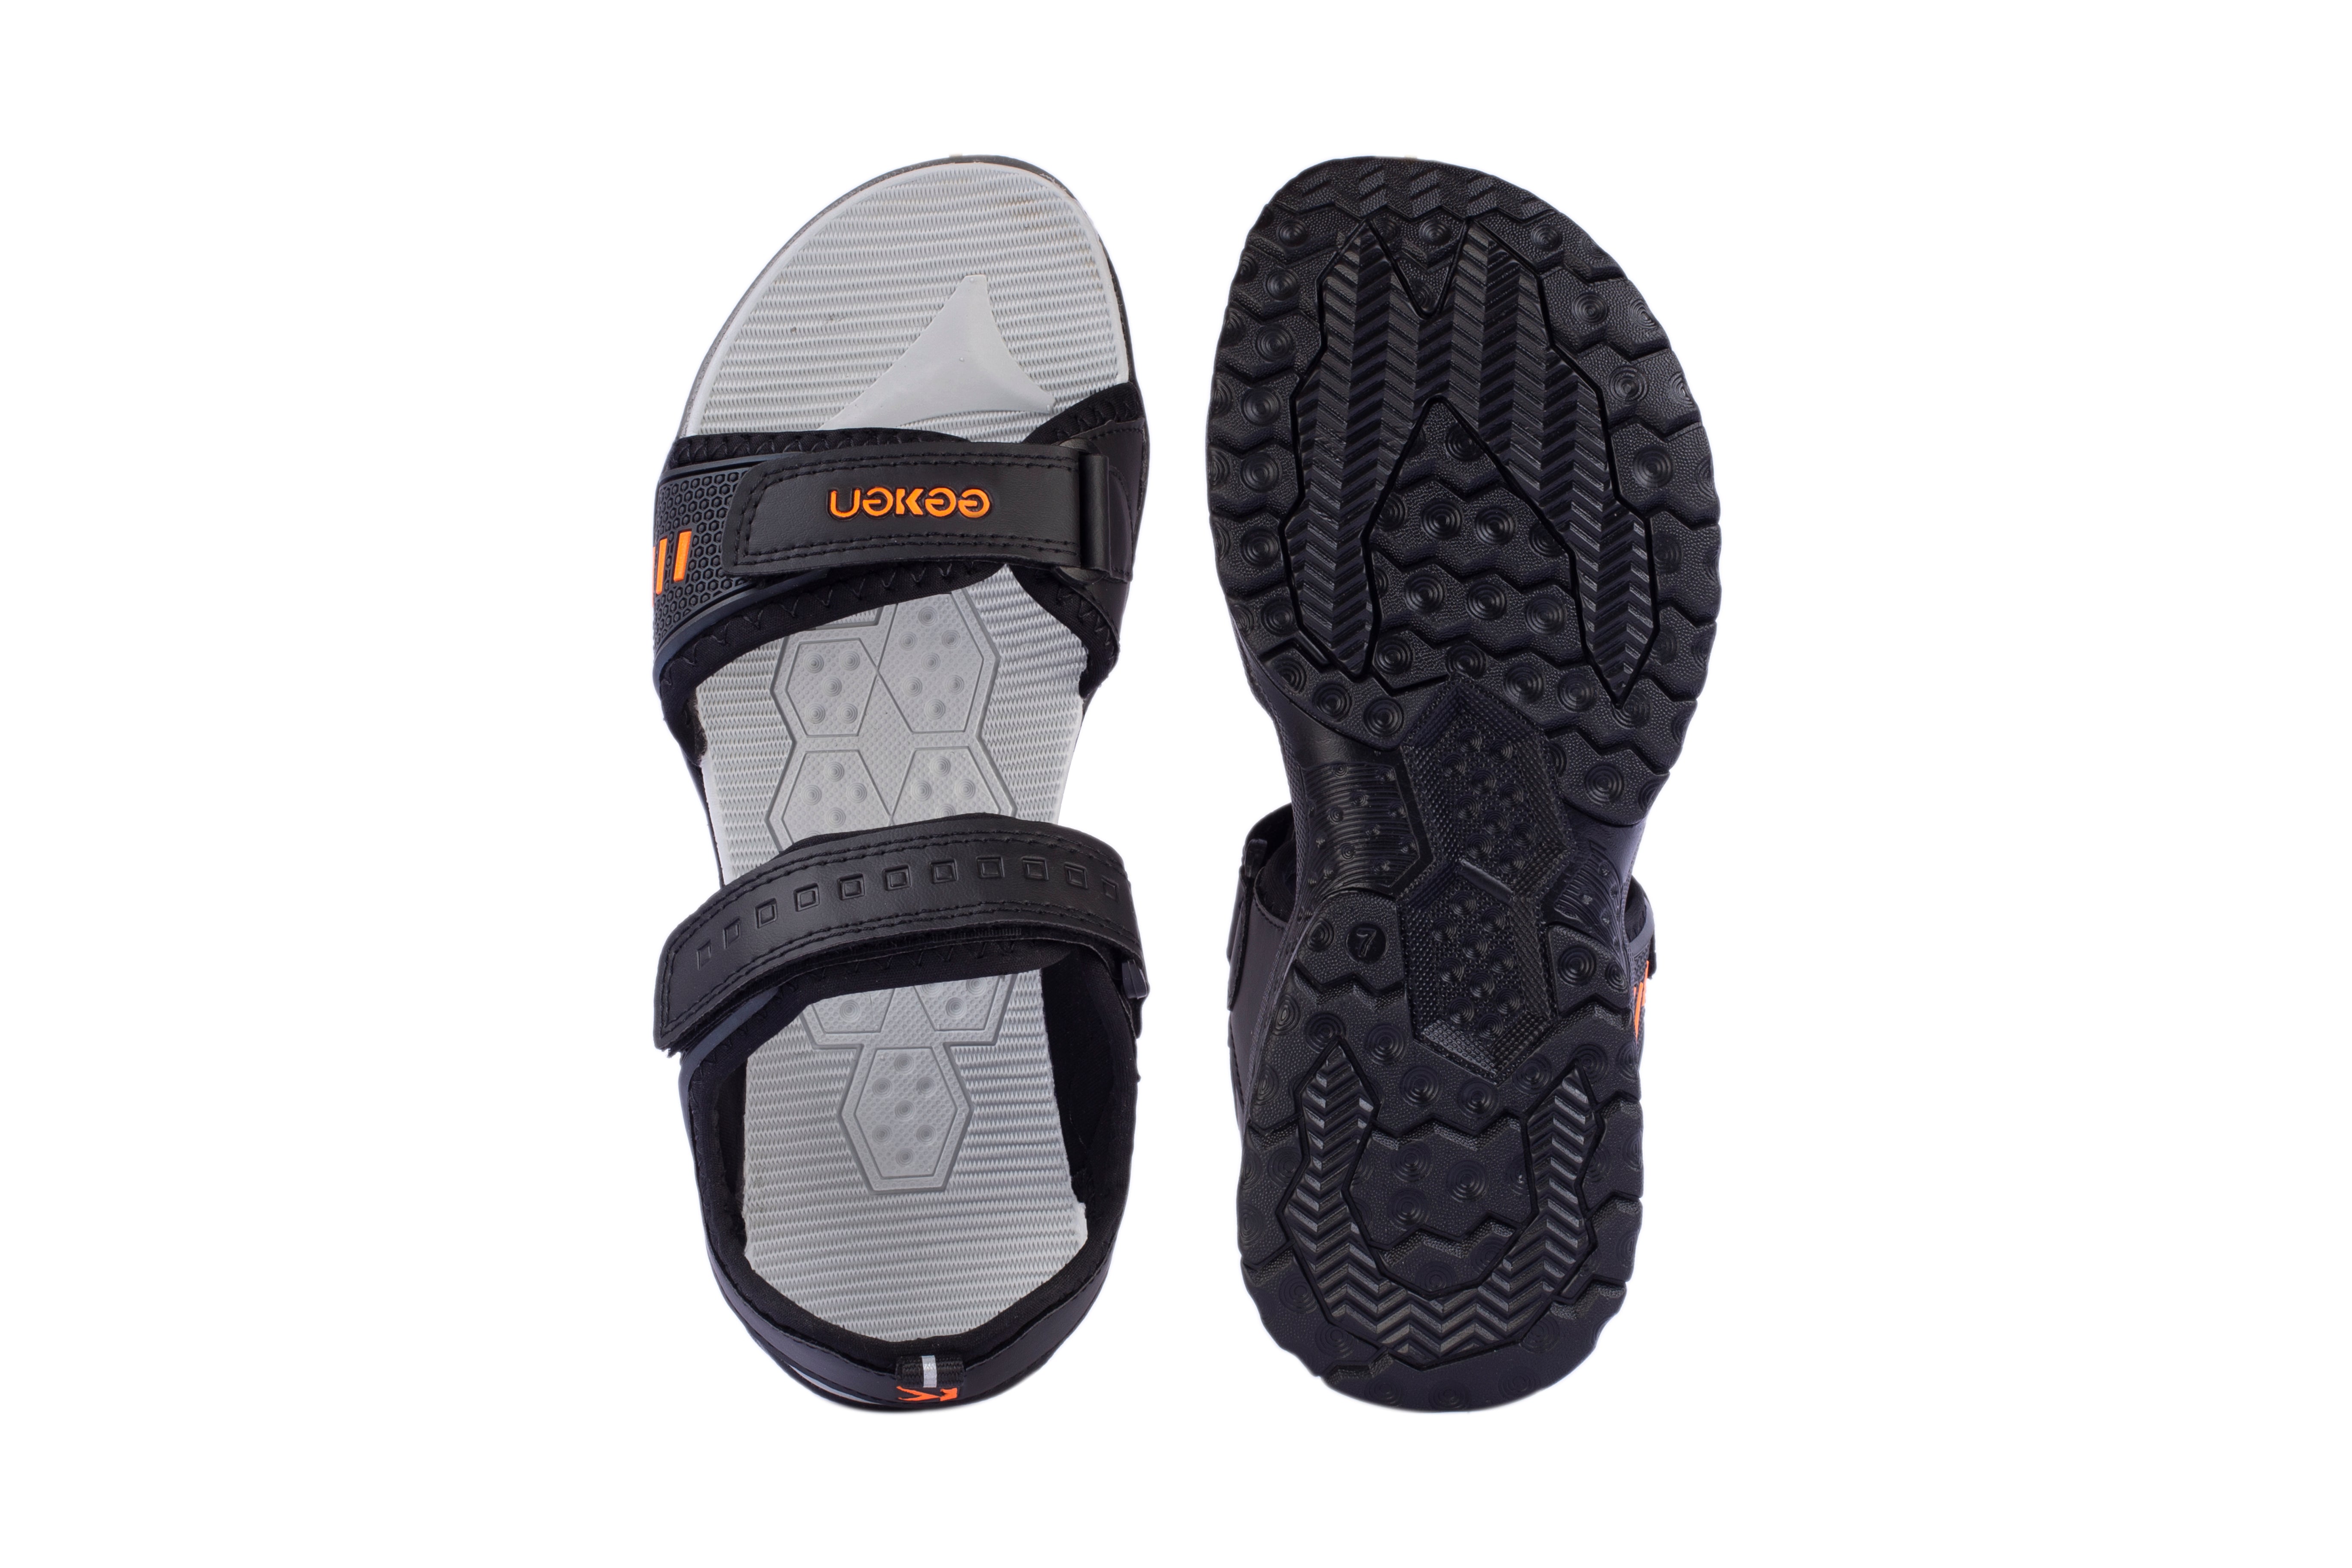 Eeken Lightweight Anti-Skid Black And Orange Casual Sandals For Men